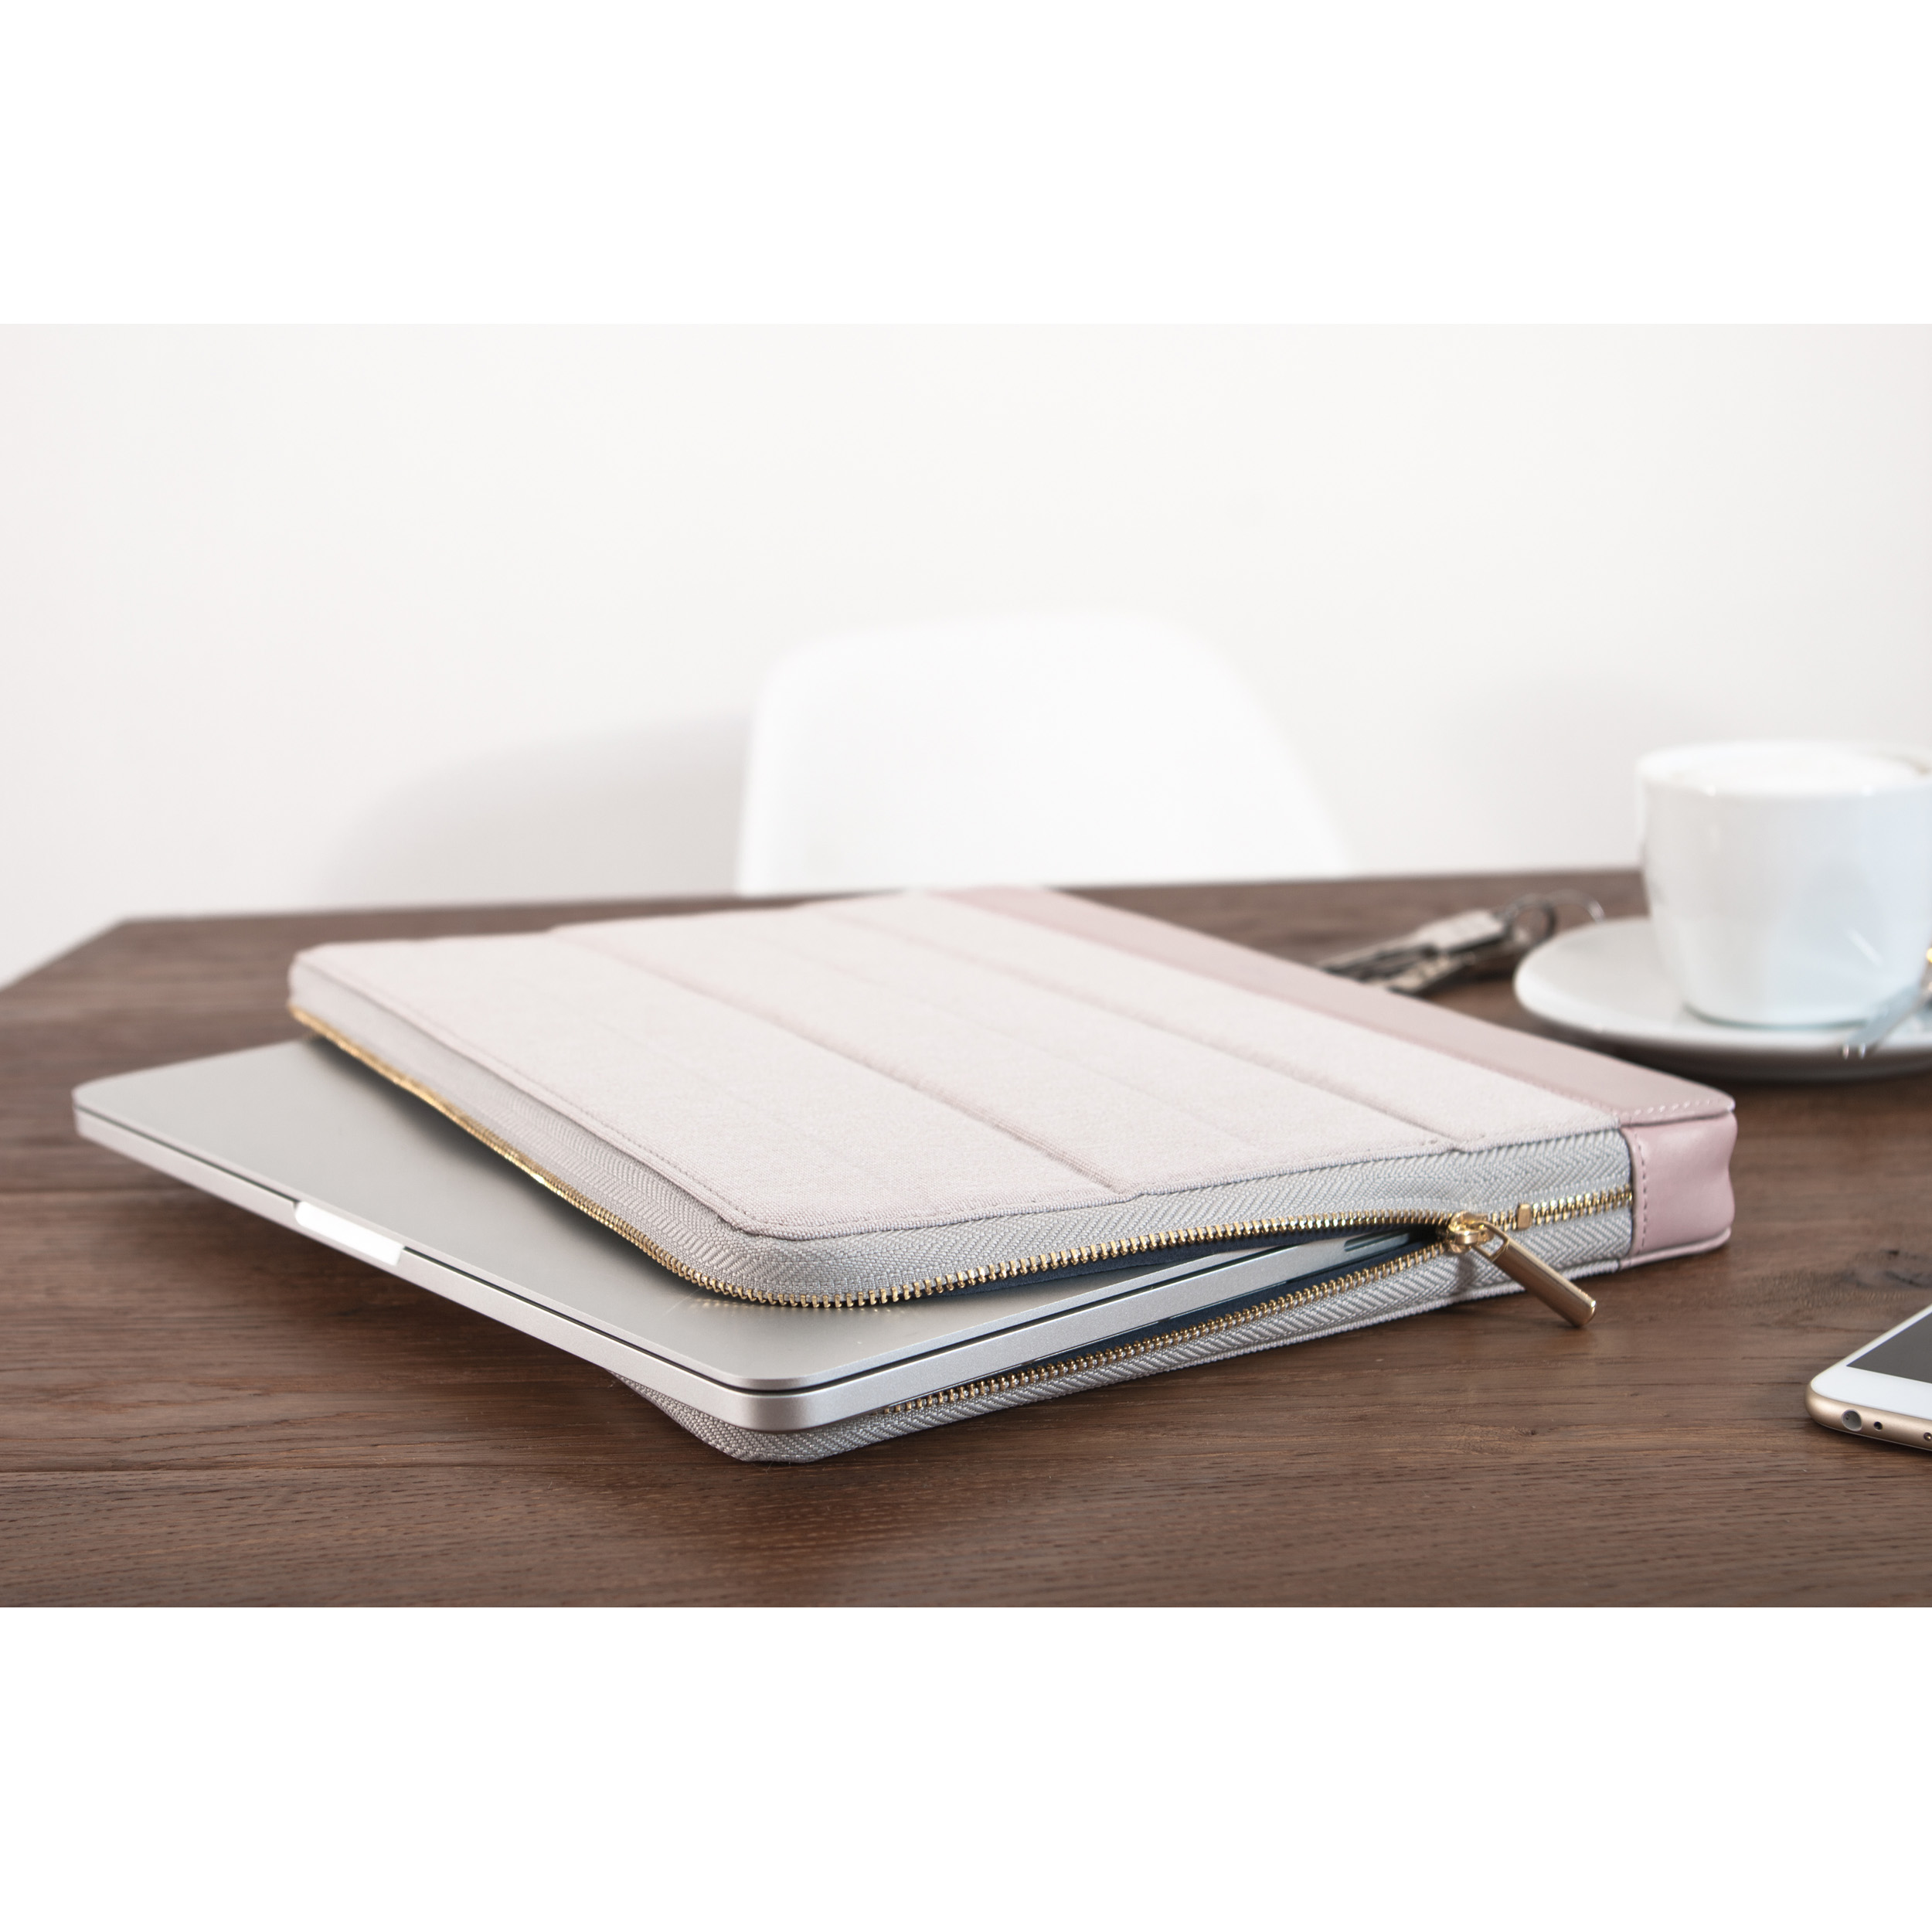 Sleeve Textil, KMP pink Air Echtleder, 13 MacBook Apple Notebook für Sleeve gray / Gray/Pink für Sleeve